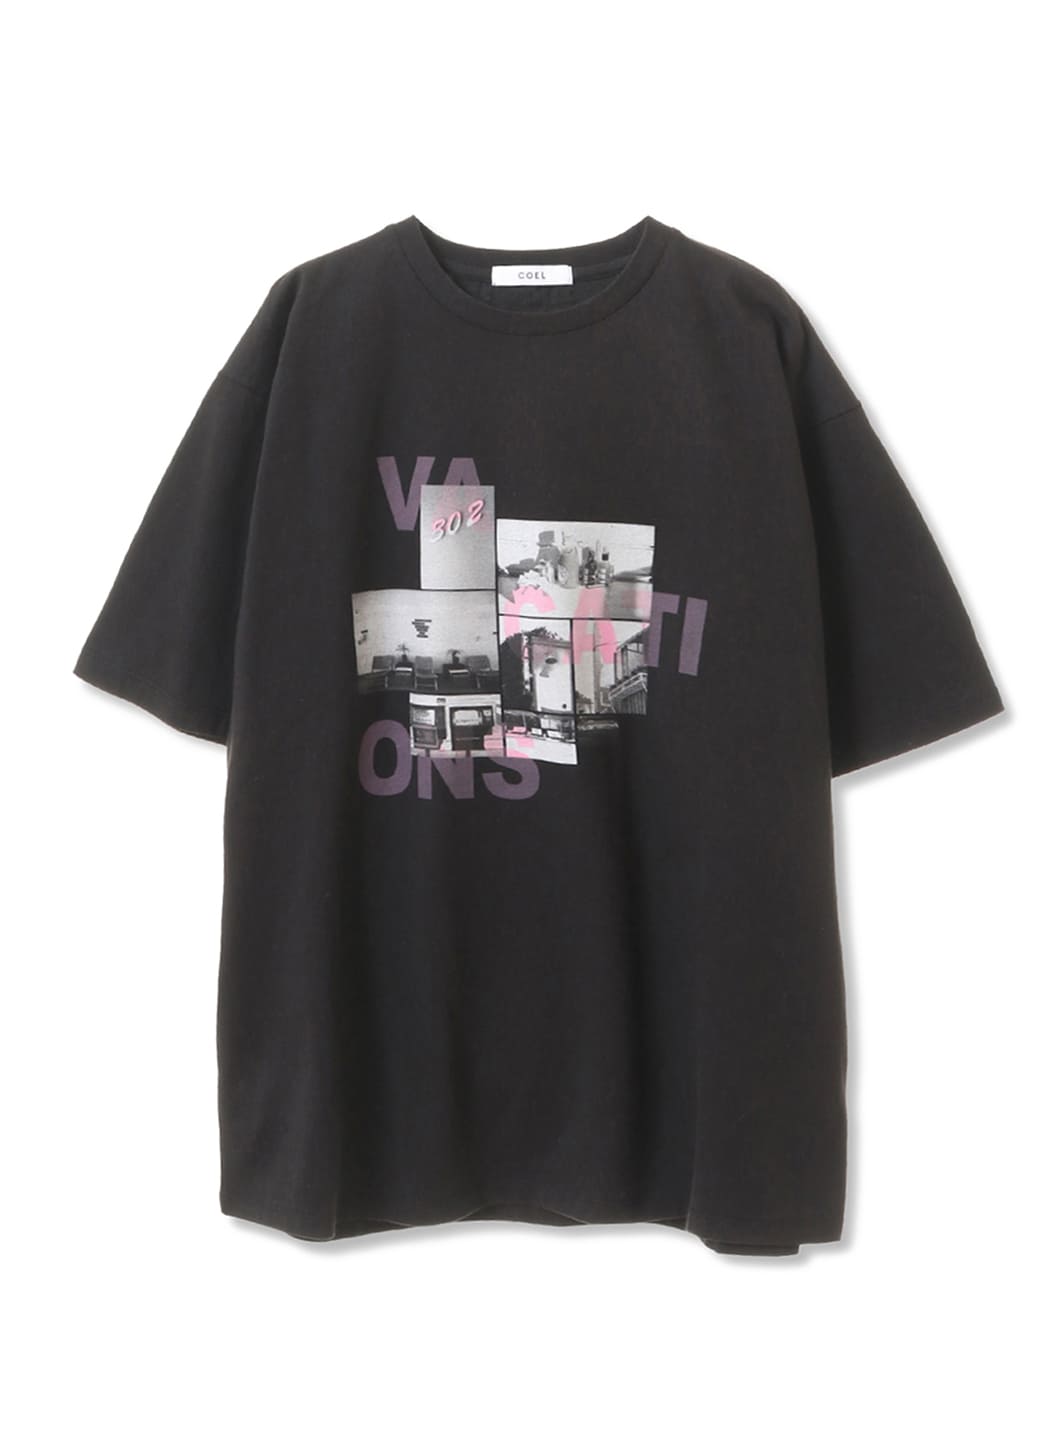 COEL Online StoreCOEL×YUJI TAKEUCHI VACATIONS フォトTシャツ(M ...